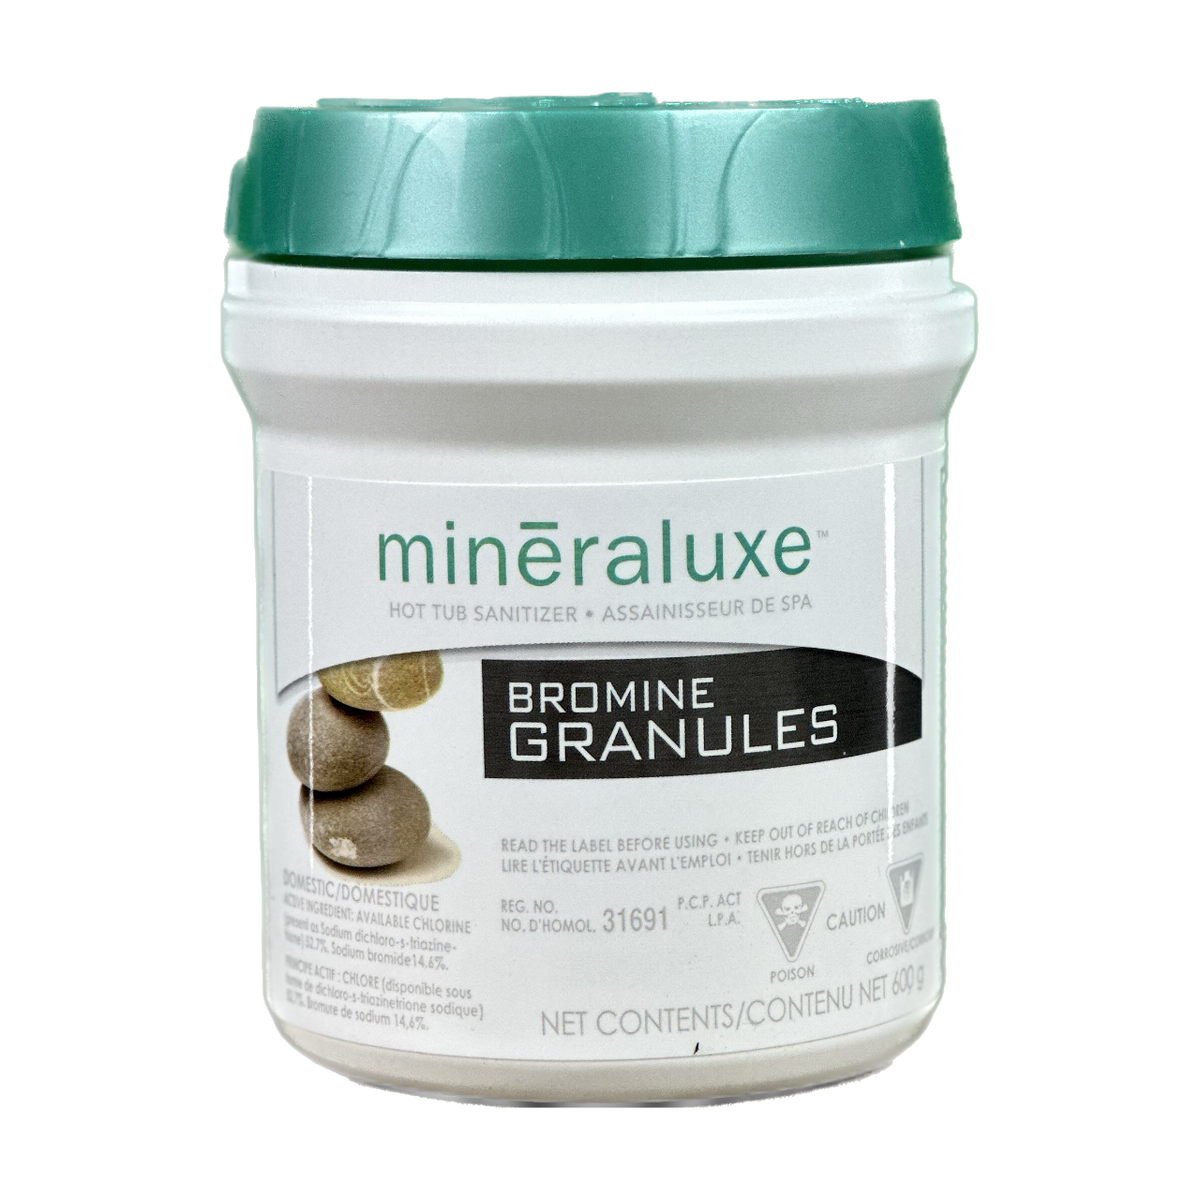 Mineraluxe™ Bromine Granules